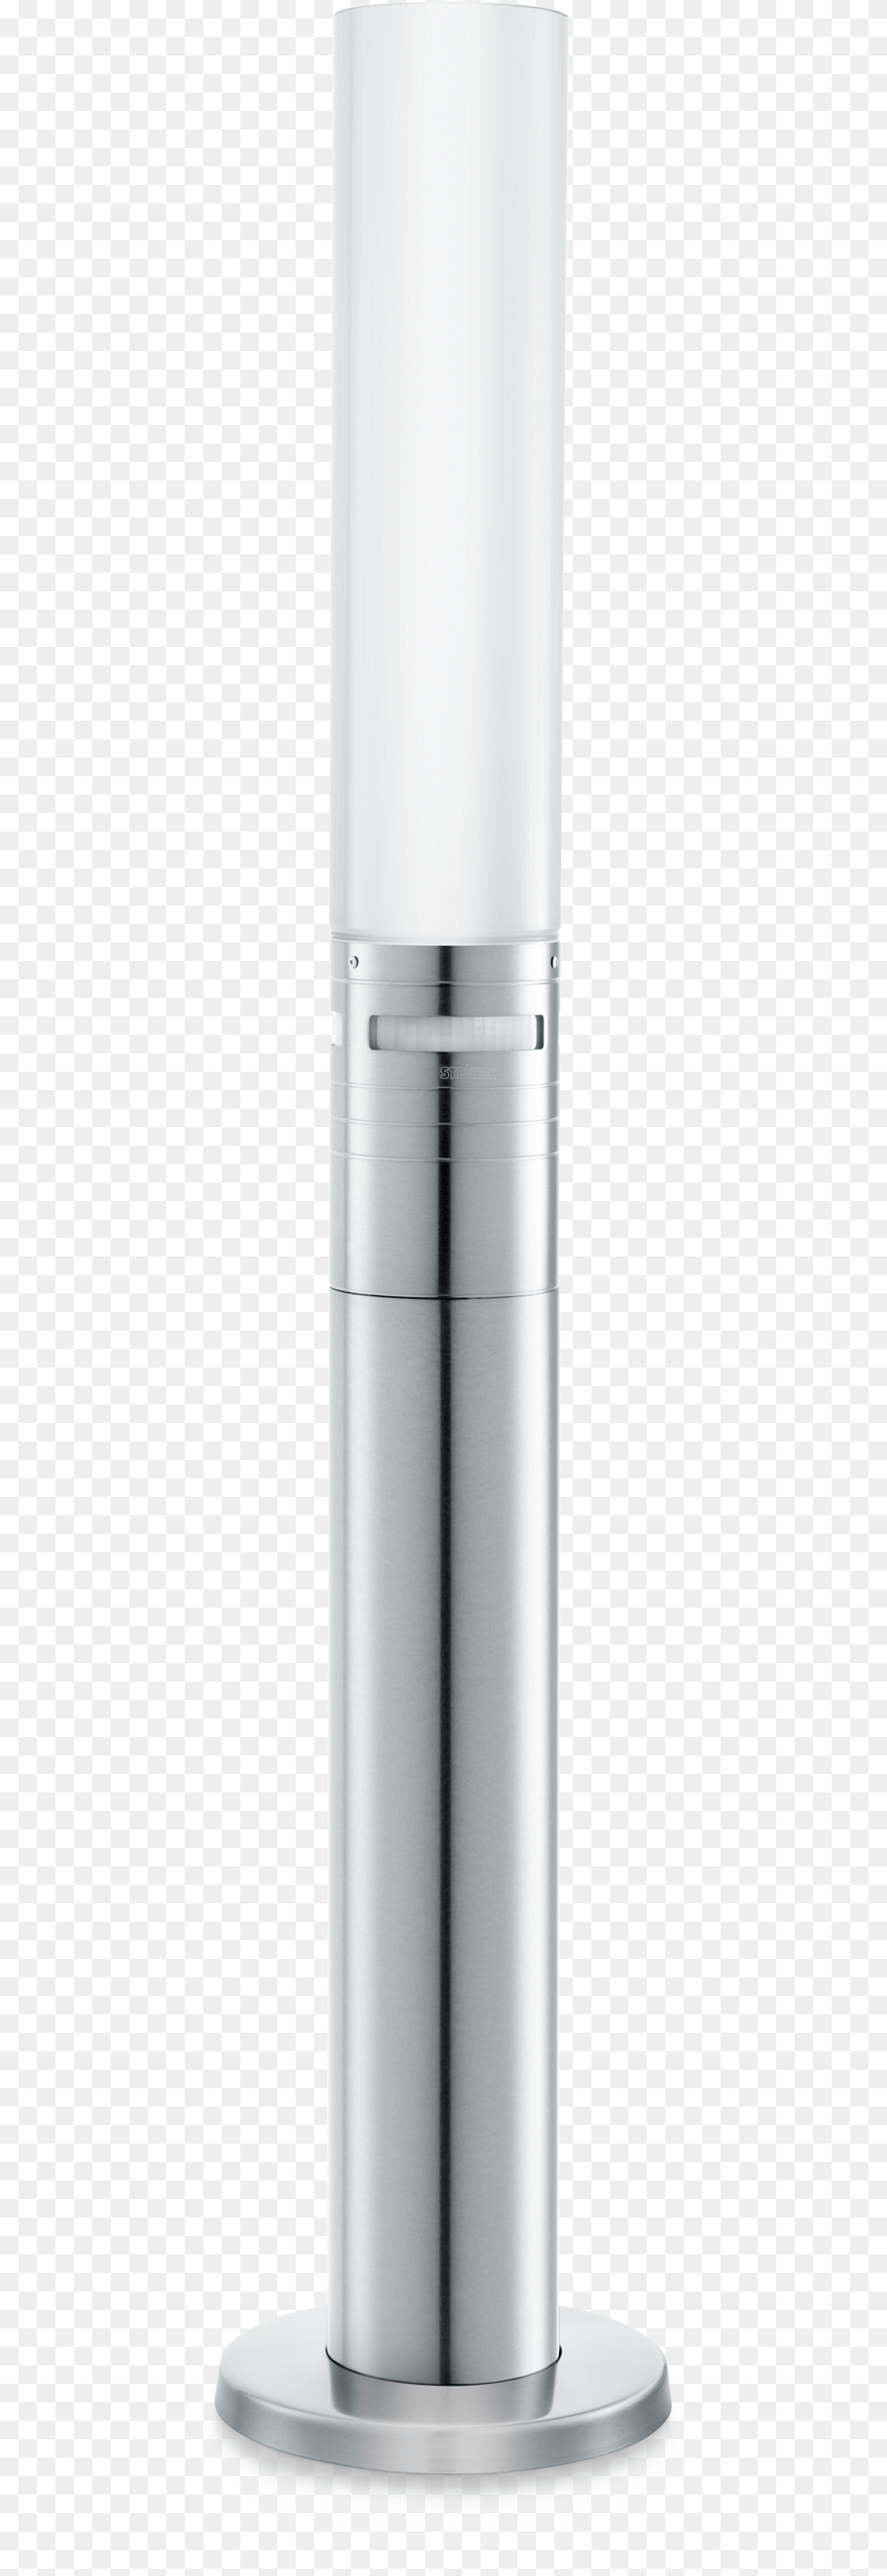 Gl 60 Led Motion Detector, Cylinder, Smoke Pipe, Lamp Png Image